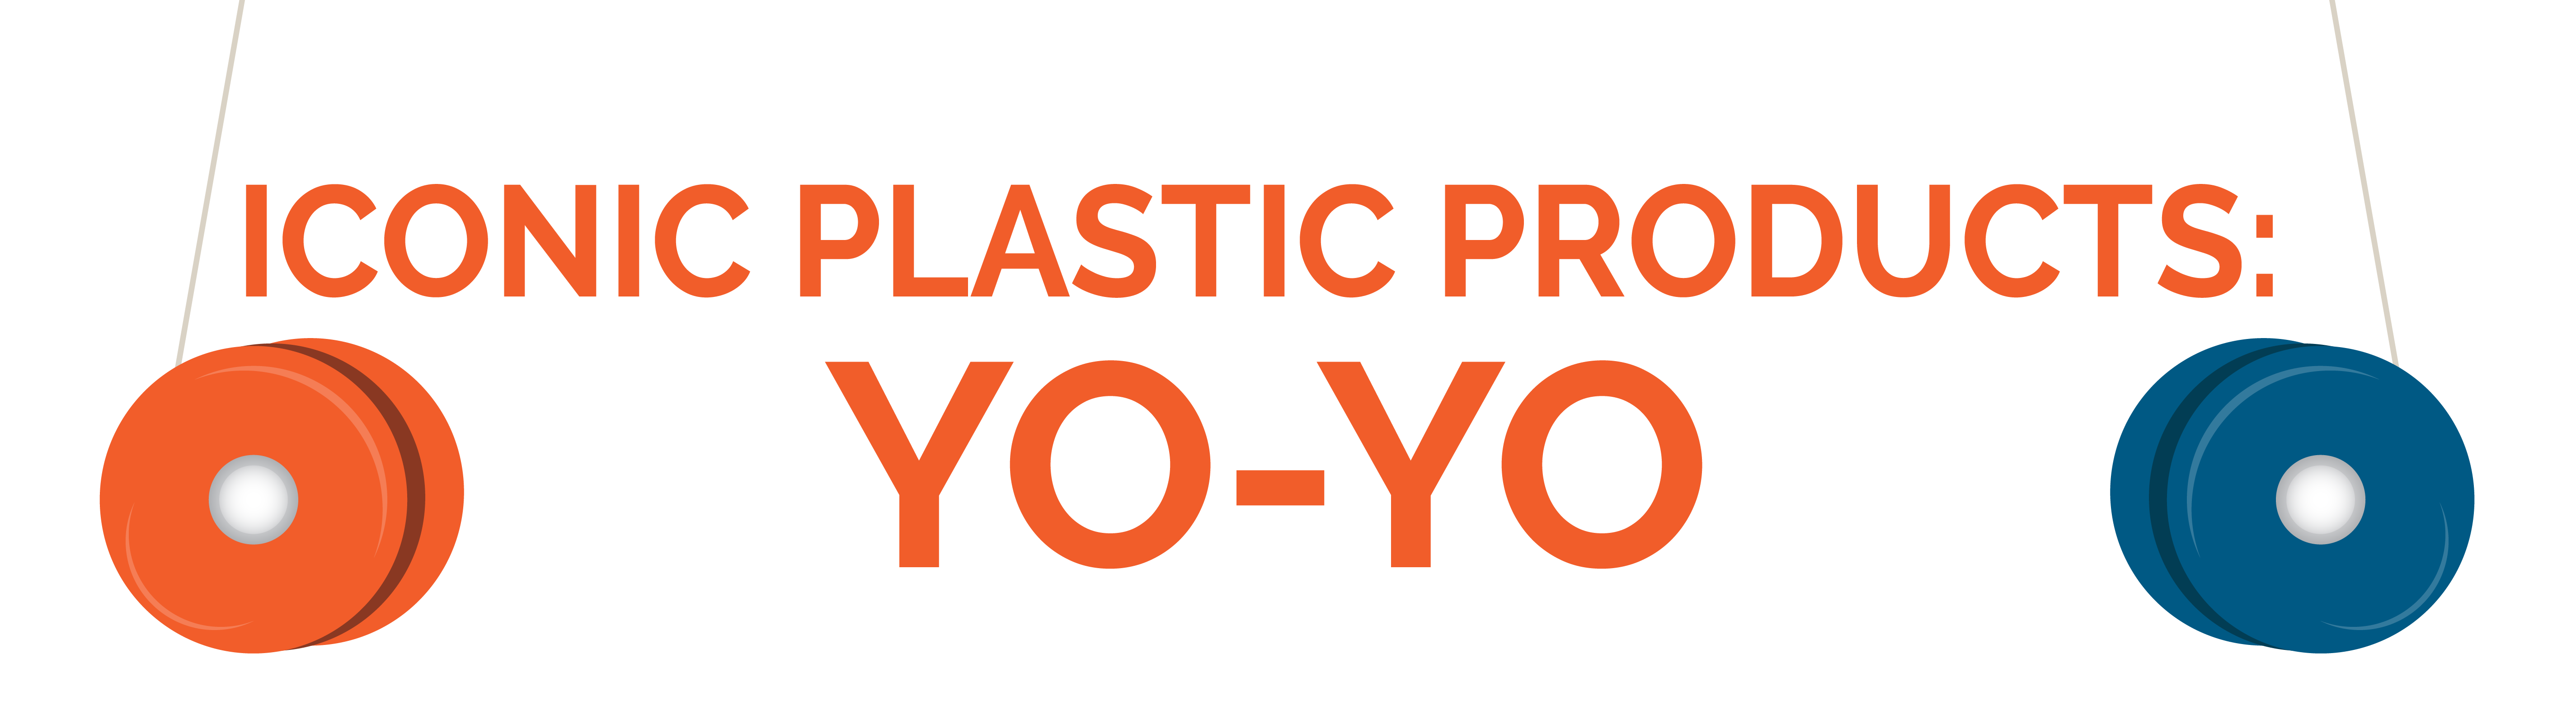 iconic plastic products - yoyo